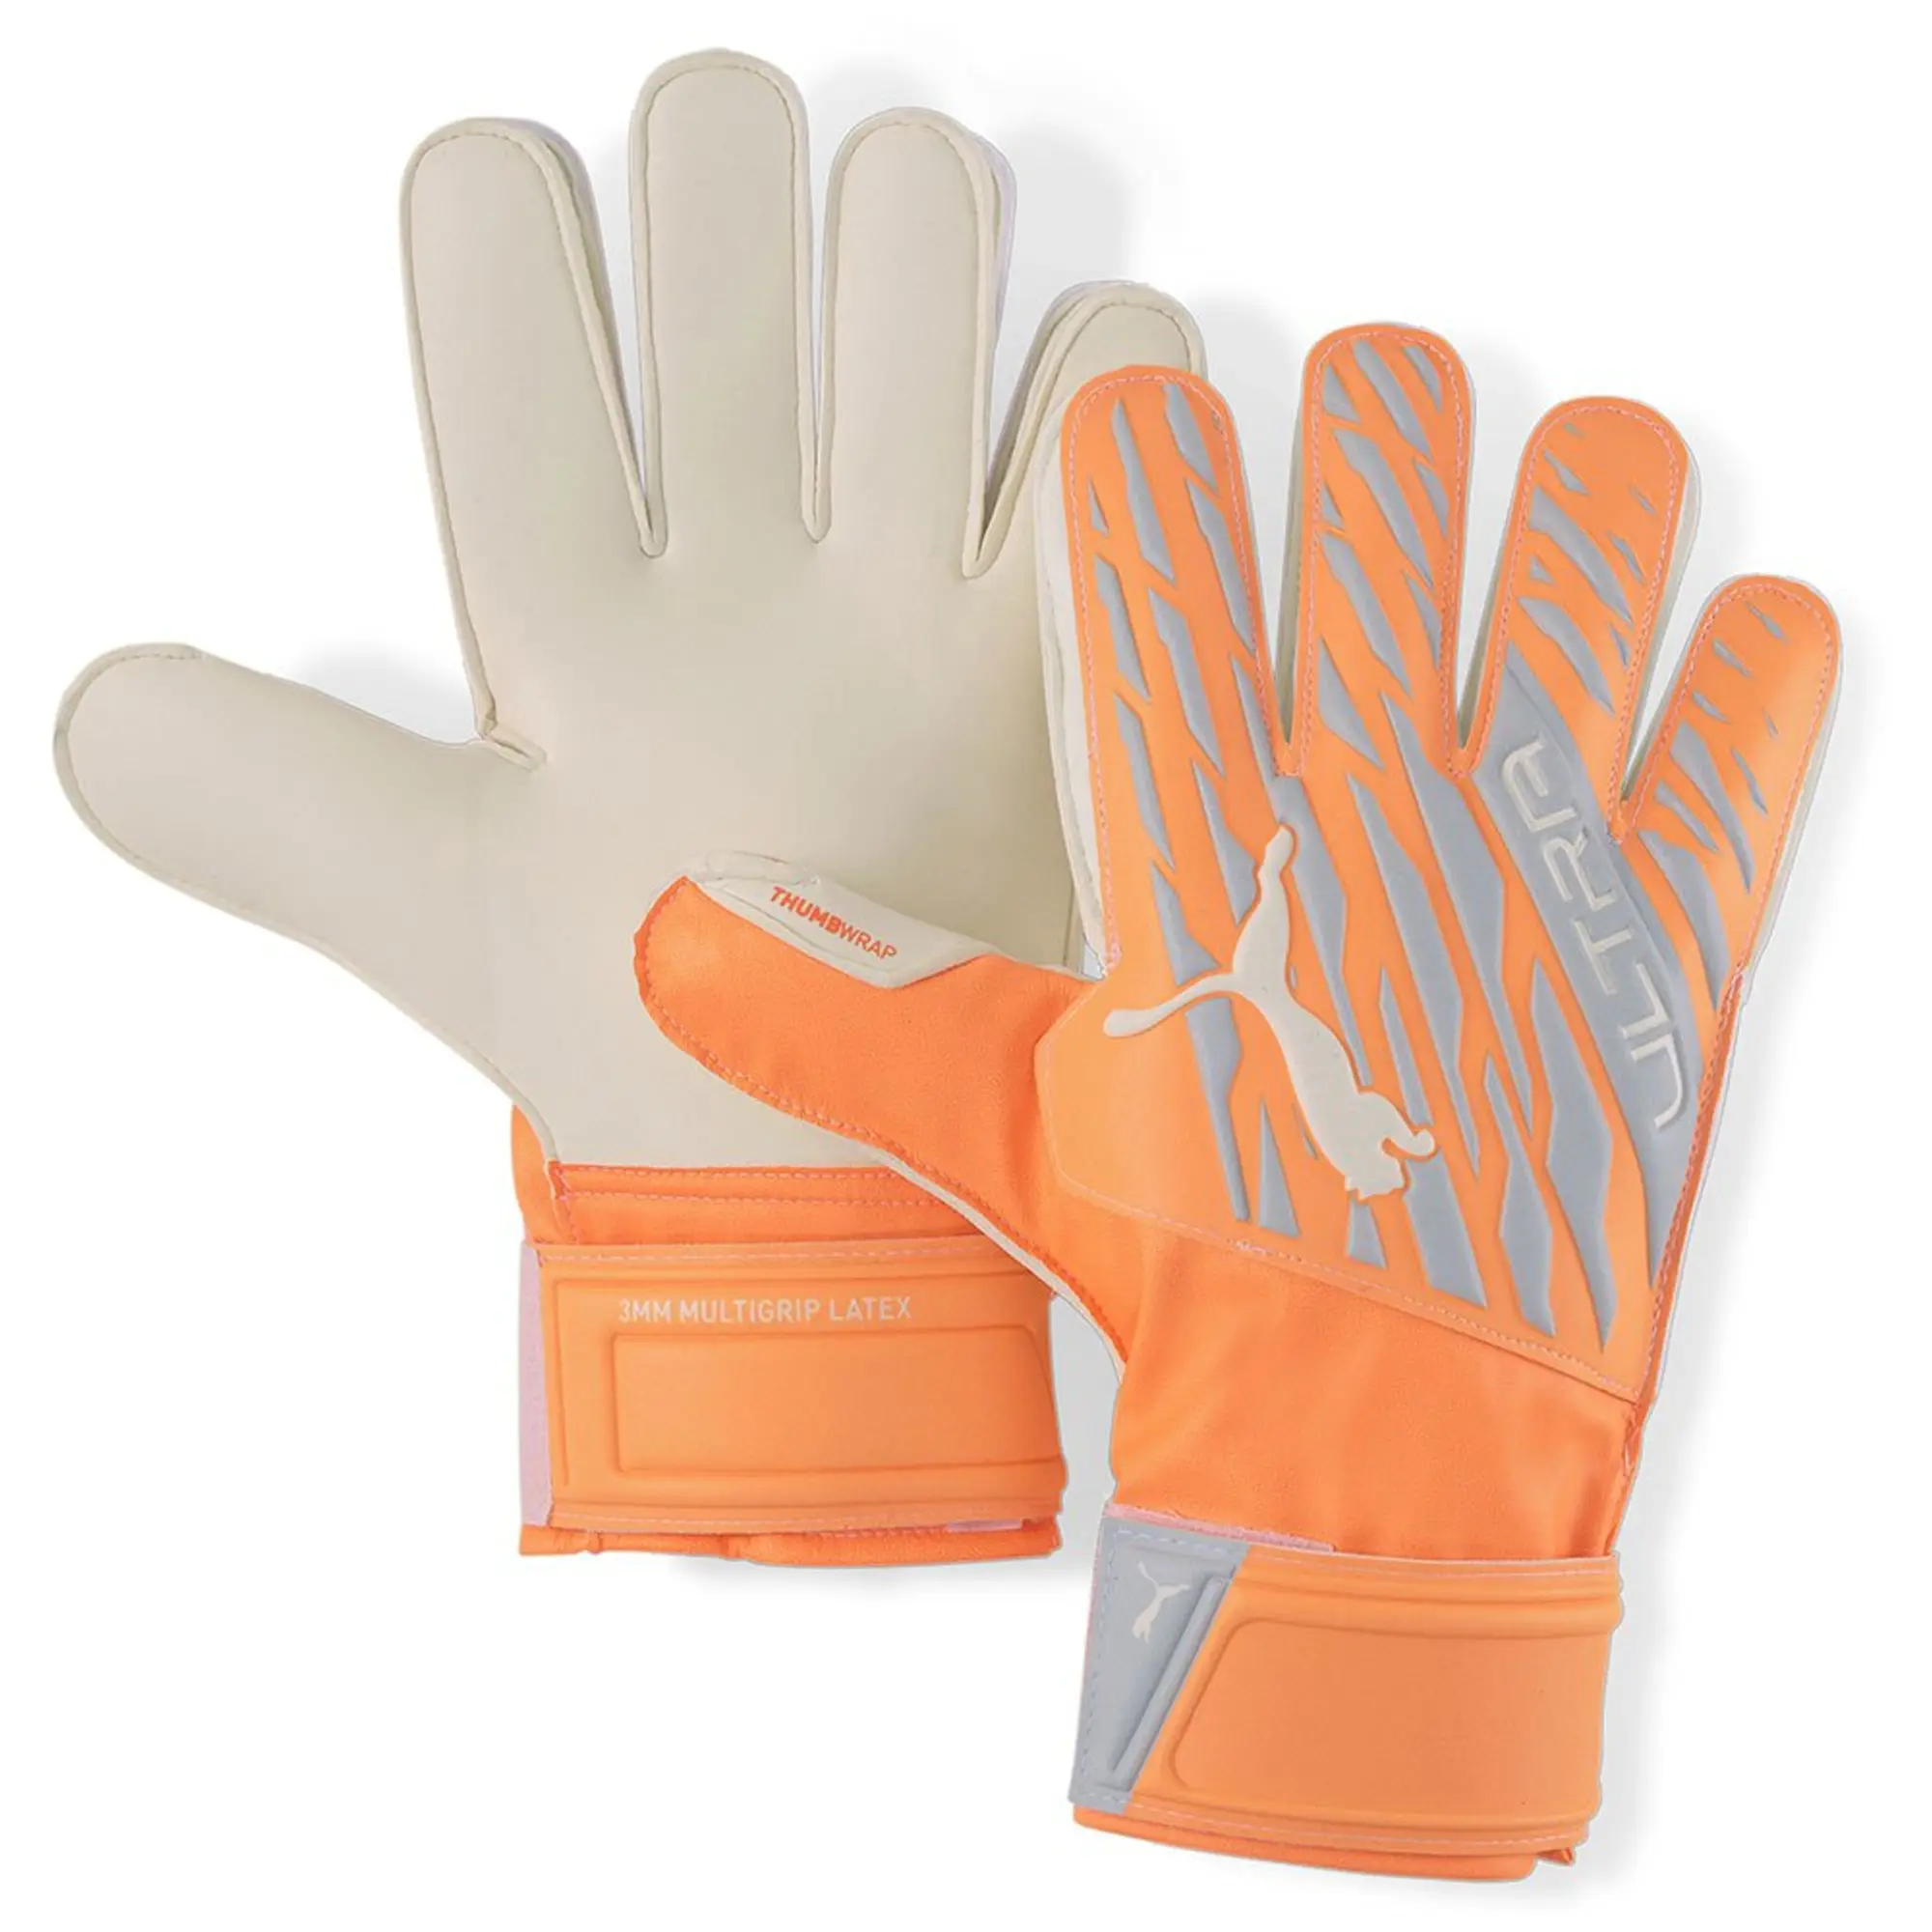 Puma Ultra Protect 3 Goalkeeper Gloves